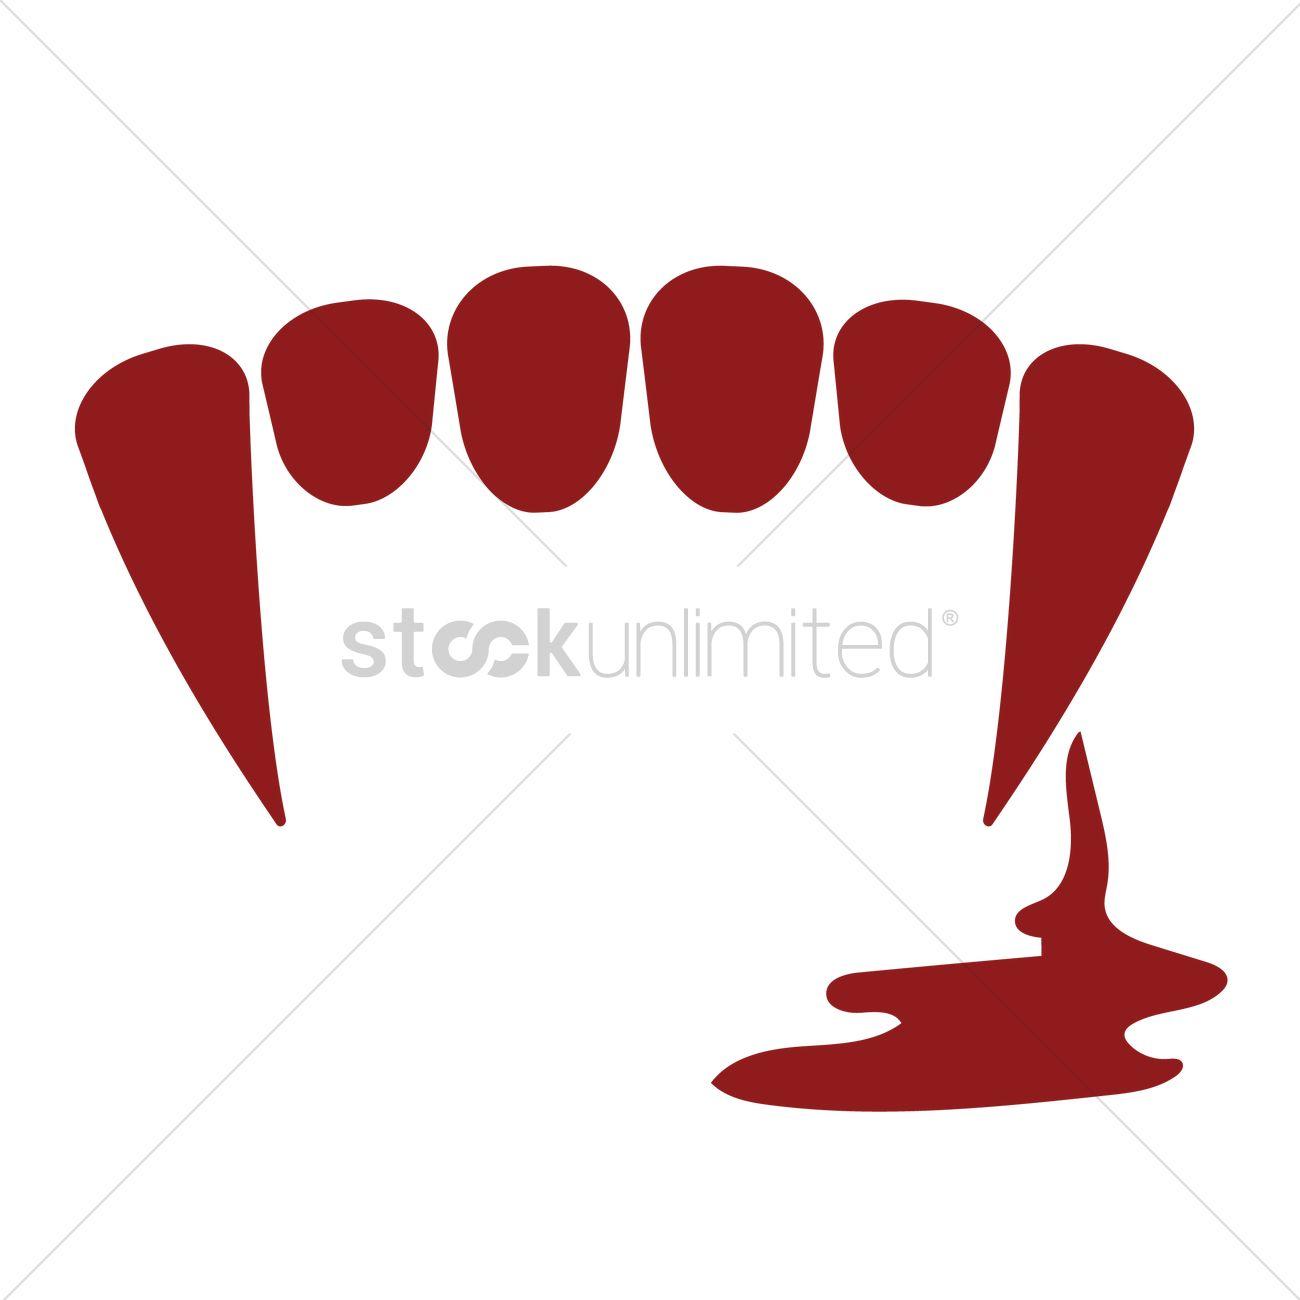 Vampire Fangs Logo - Vampire teeth with blood Vector Image - 1495203 | StockUnlimited